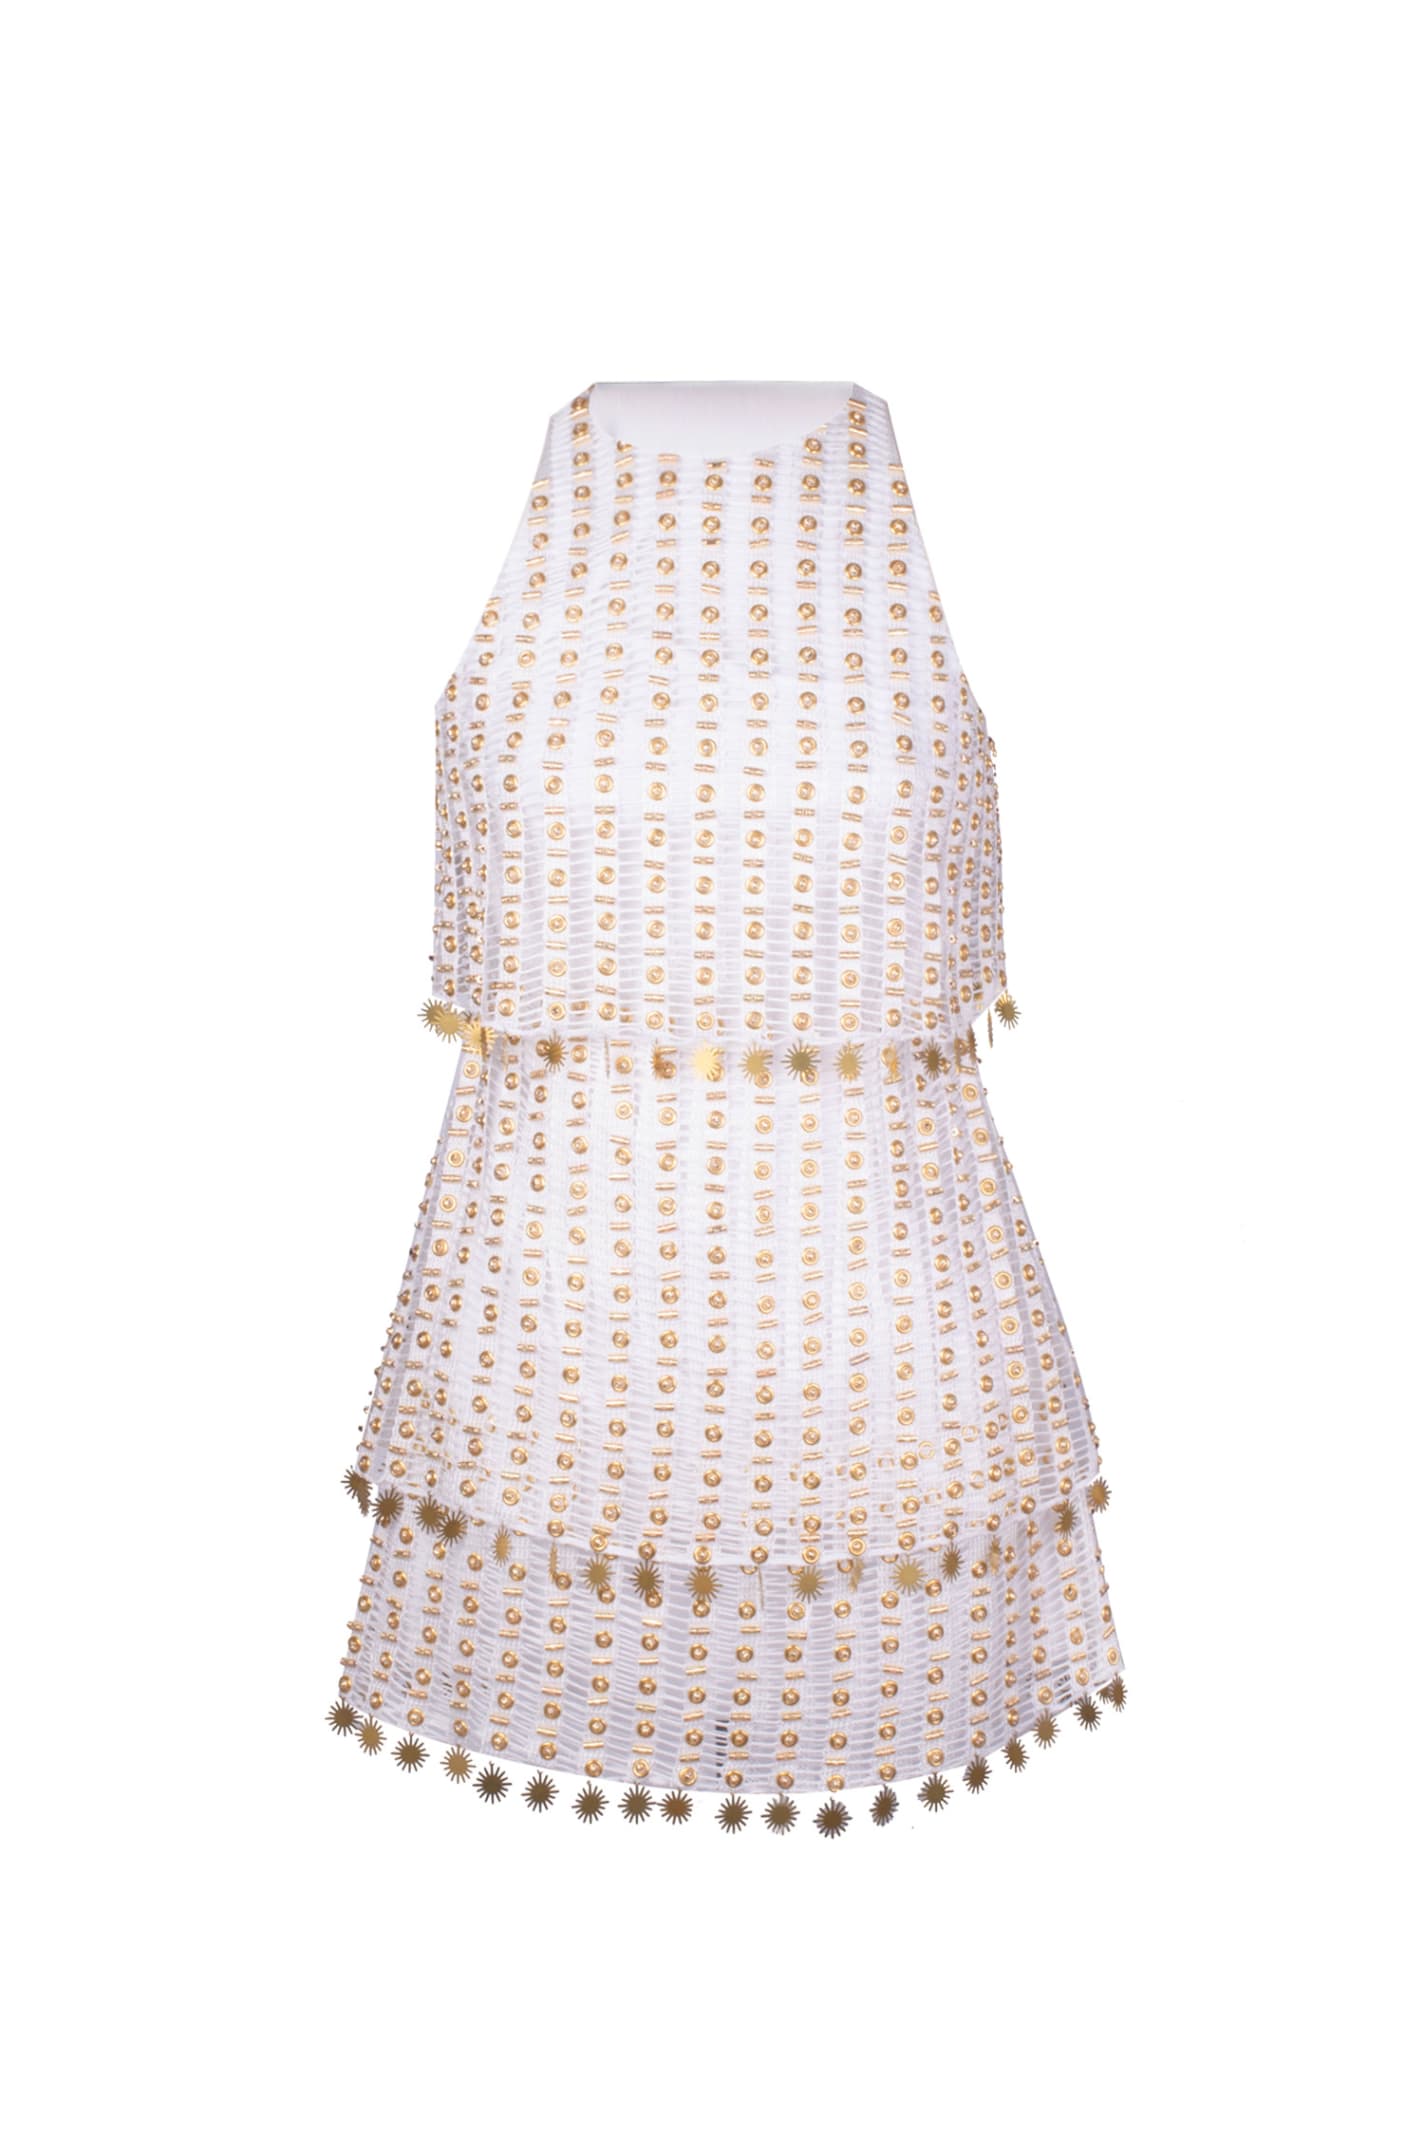 Raisa Vanessa Sleeveless Embroidered Mini Dress